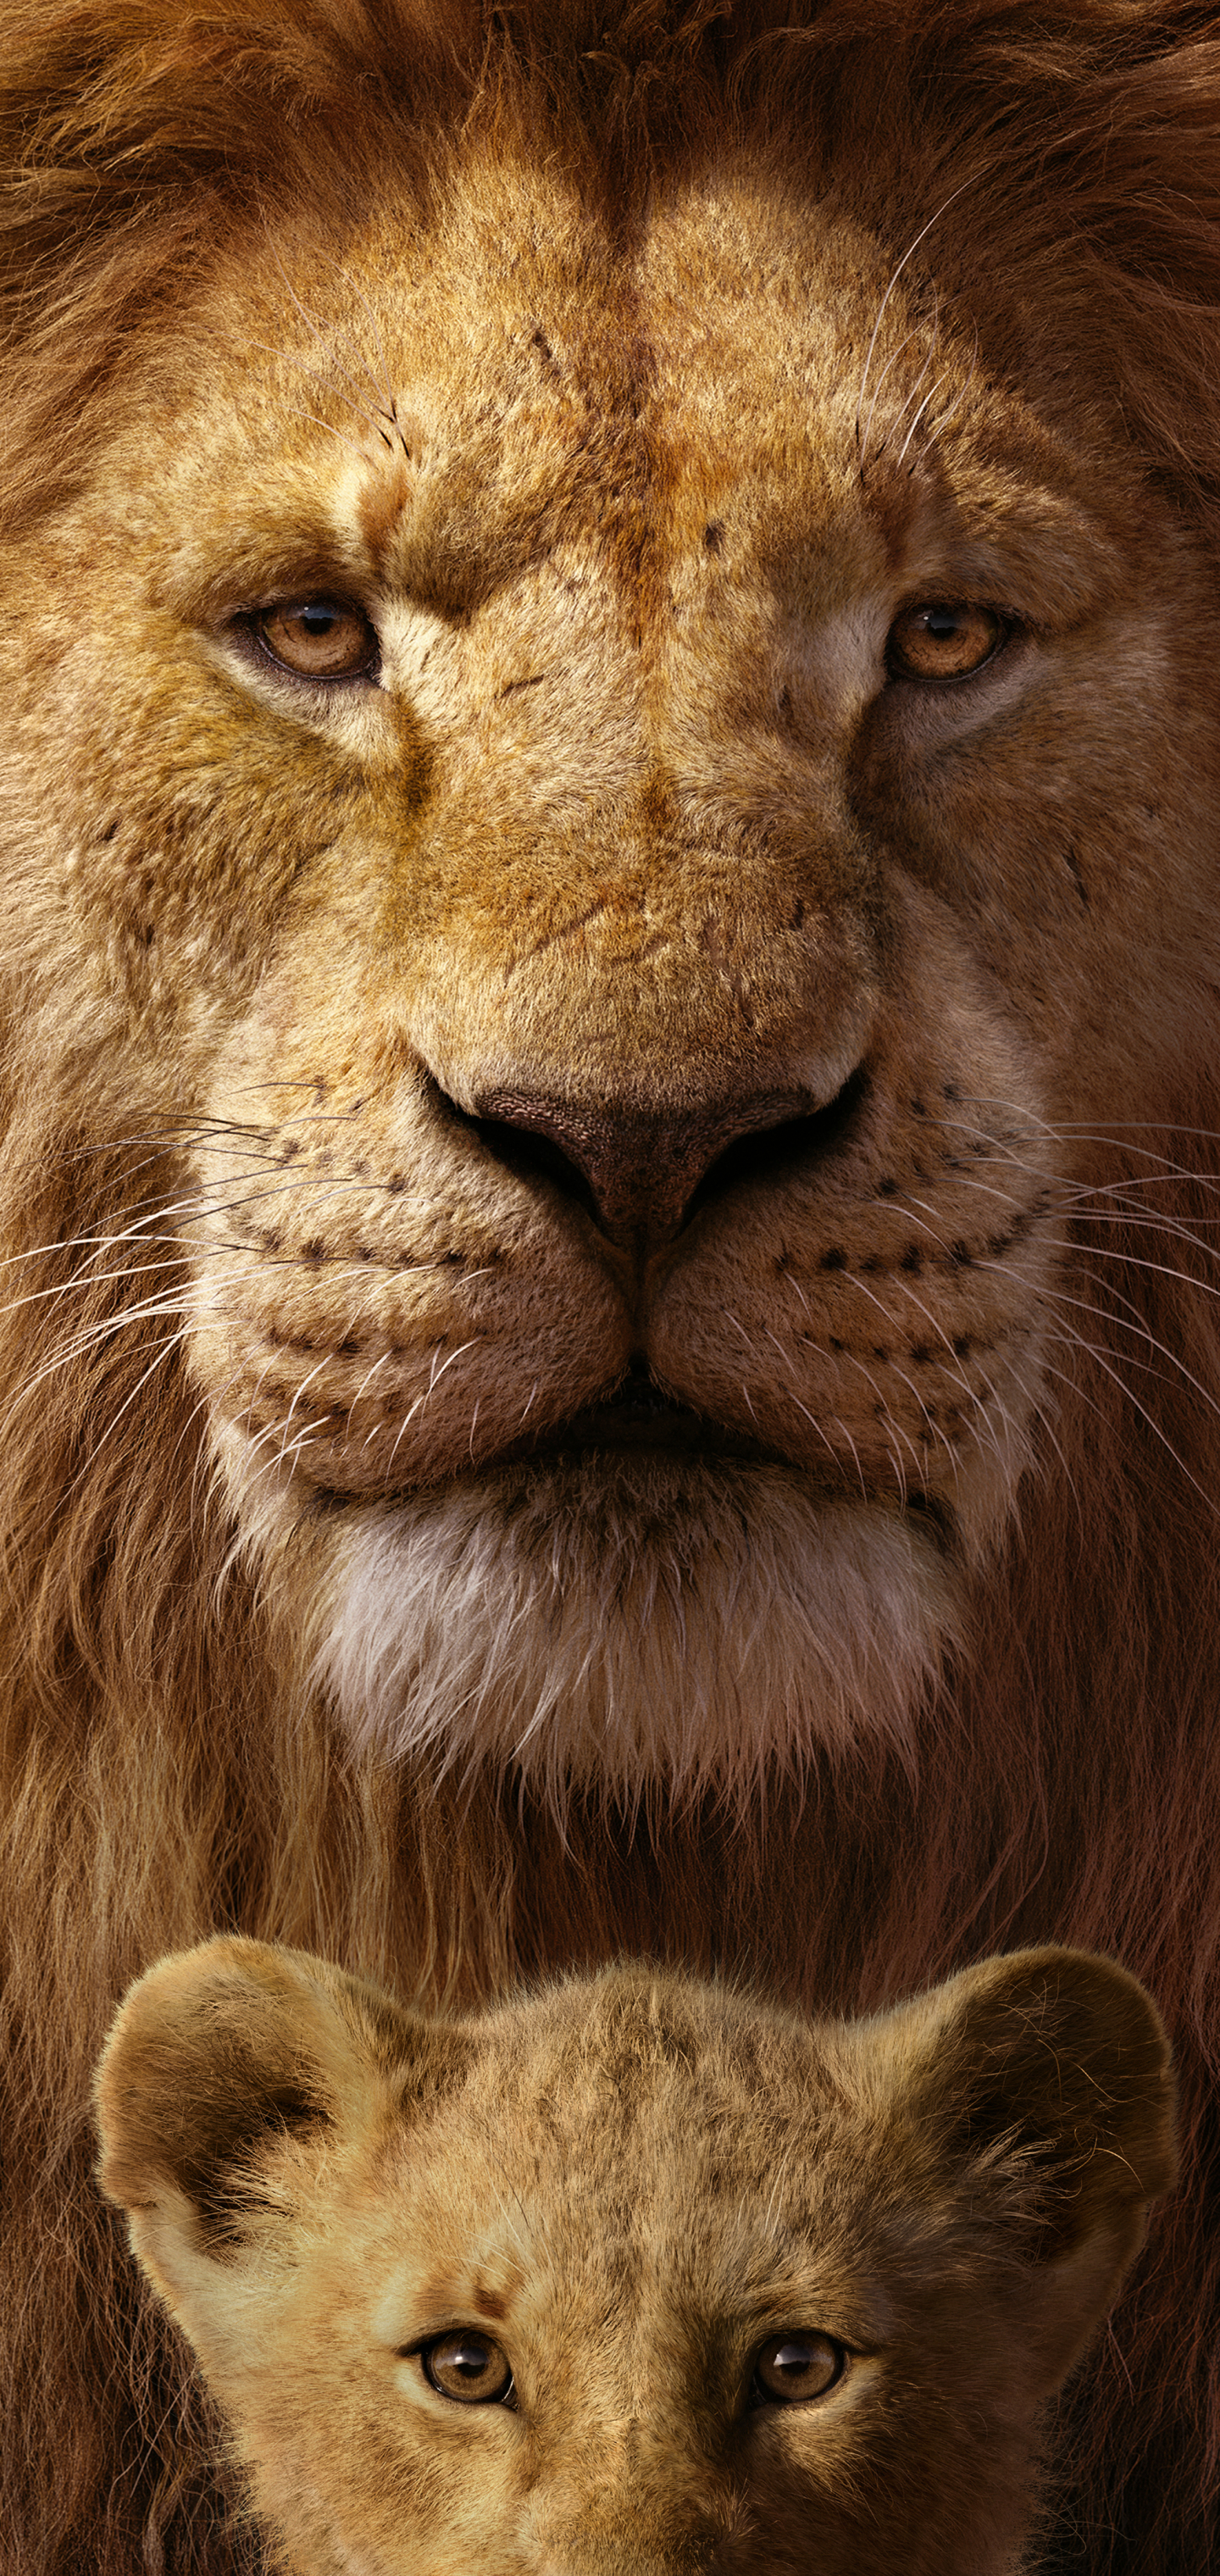 the lion king (2019), mufasa (the lion king), movie, simba